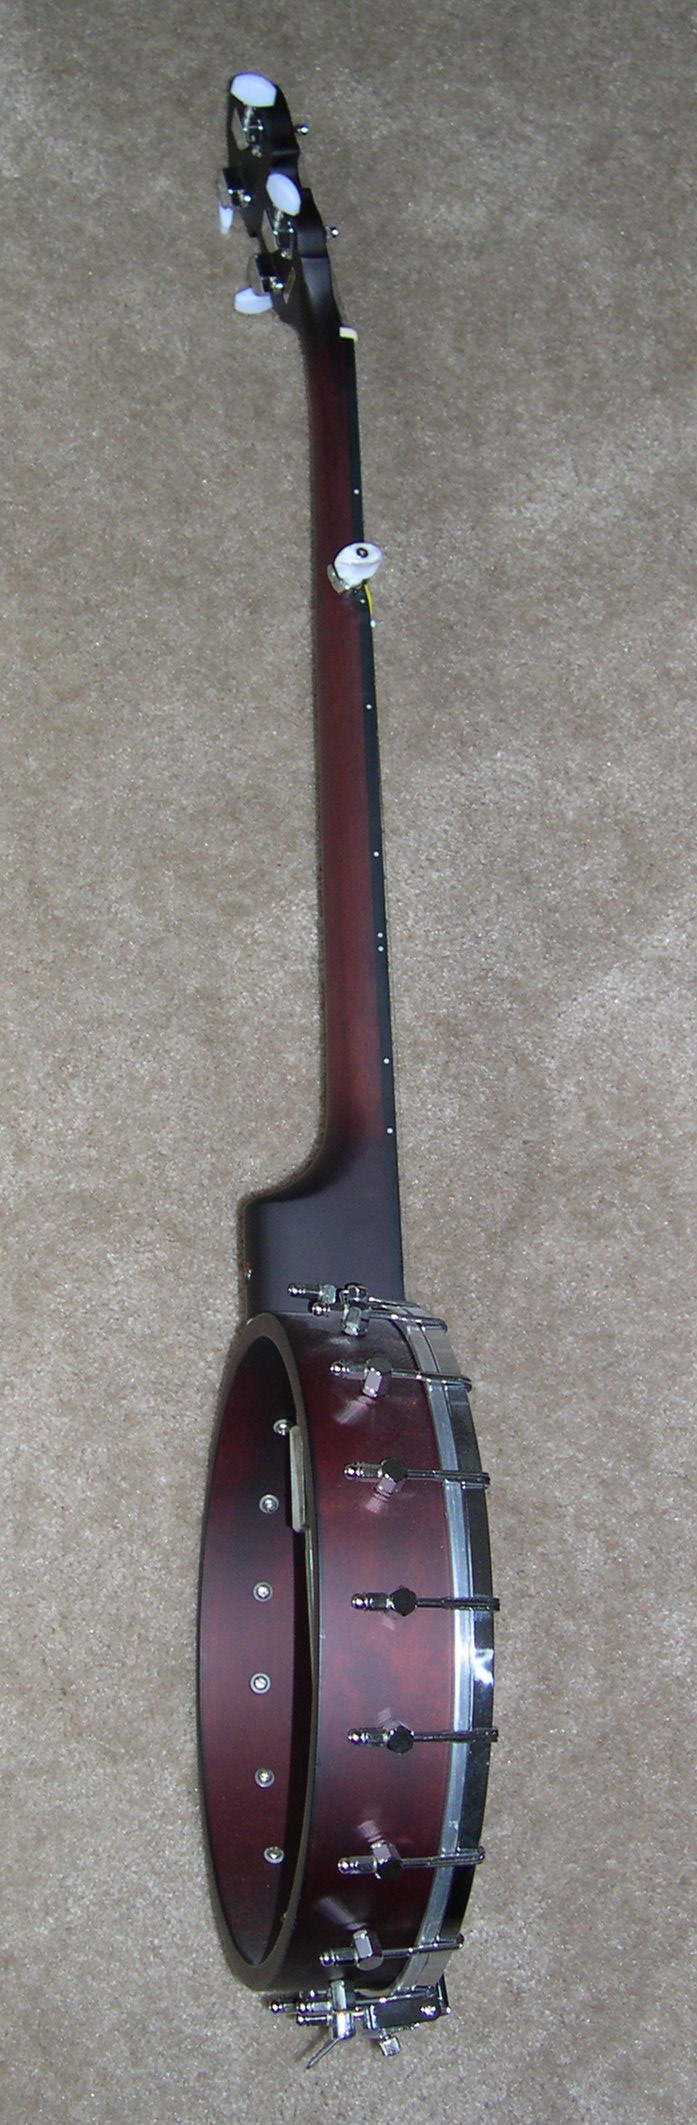 2006 Rogue 5-String Banjo - Headstock